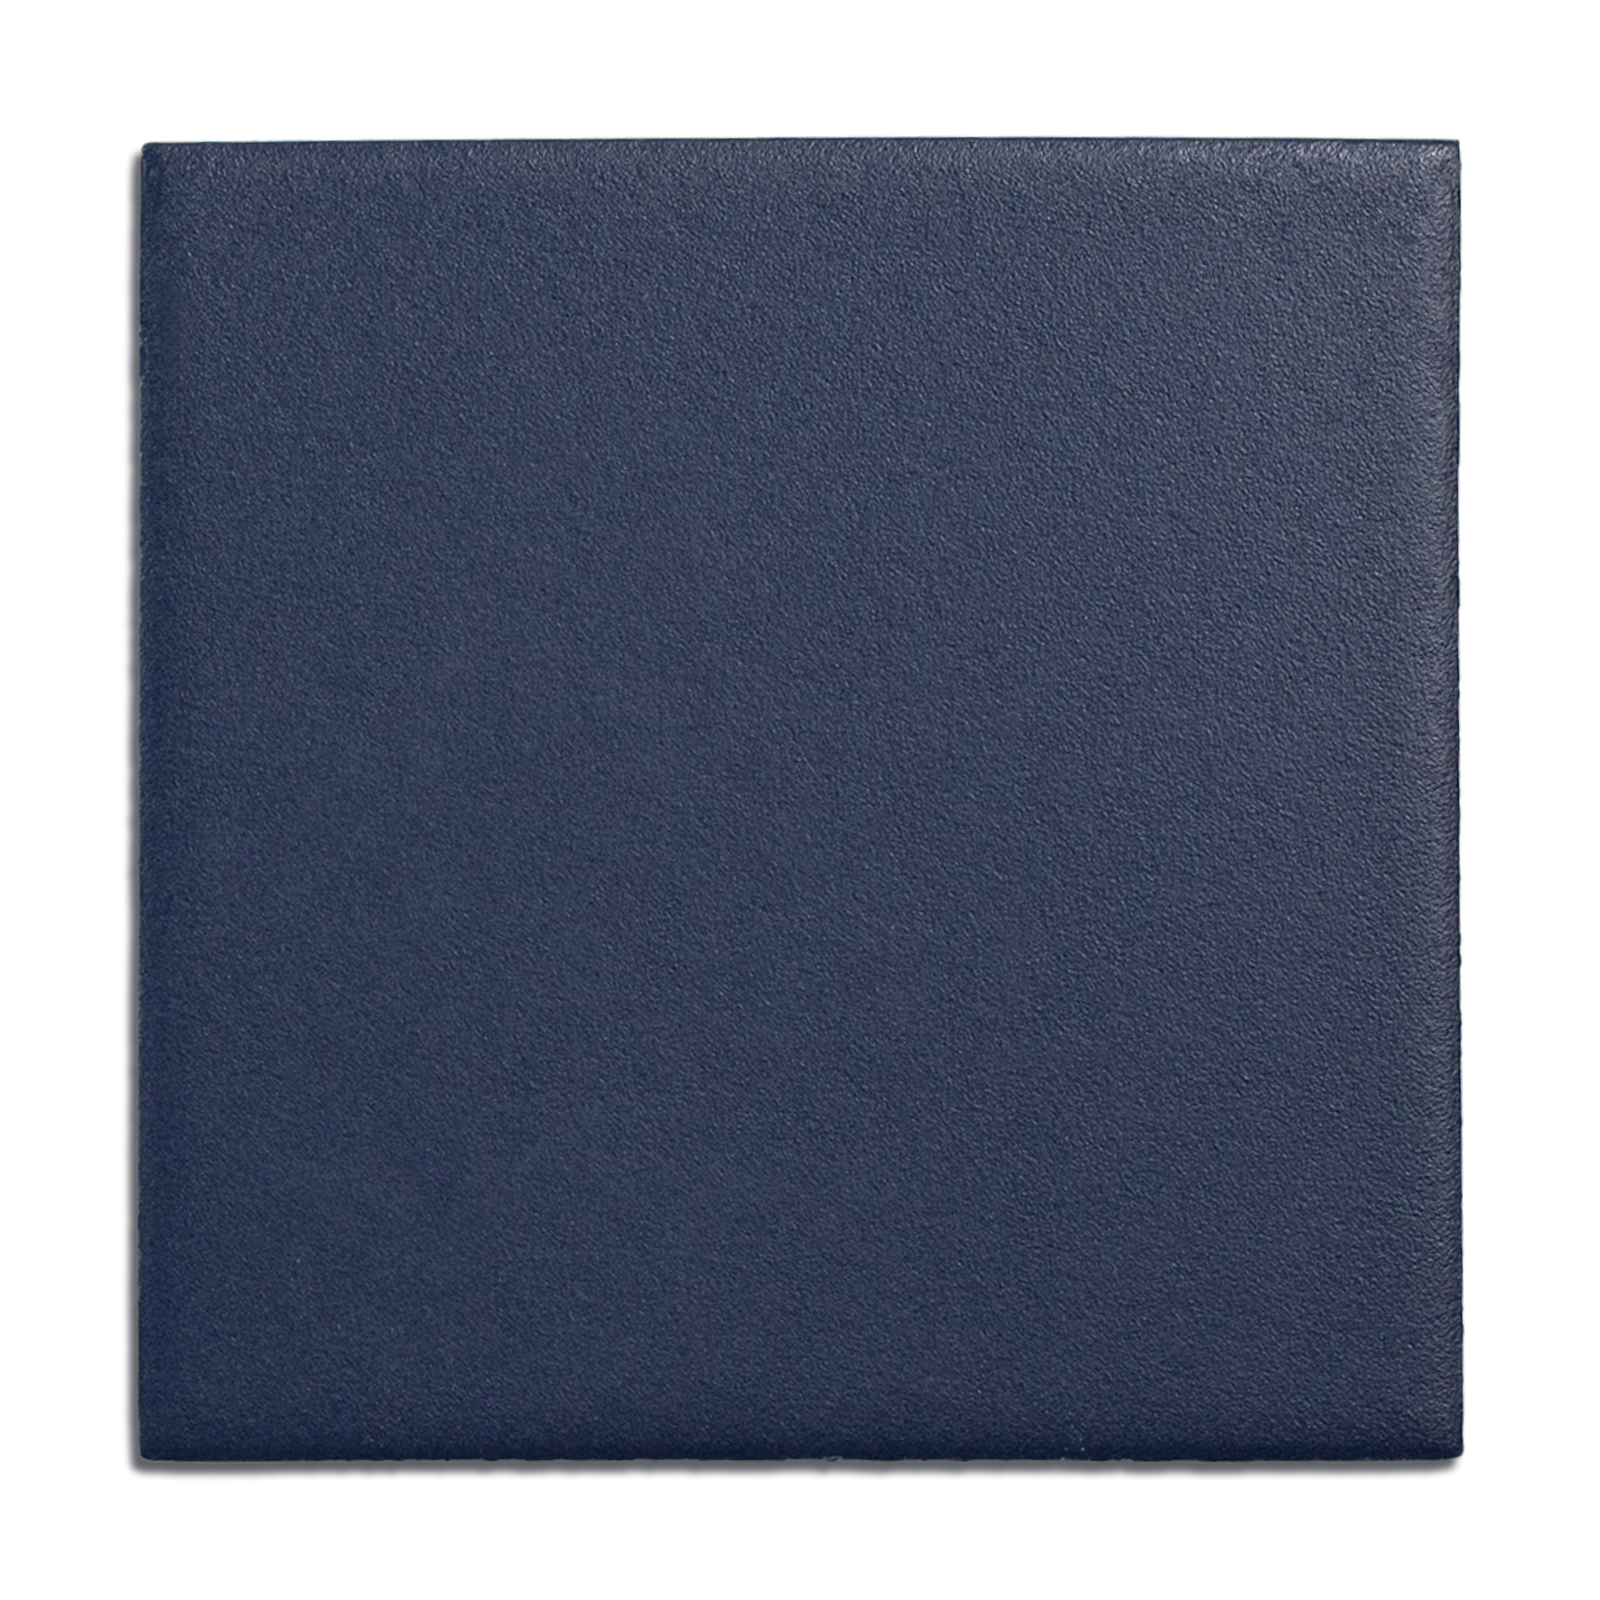 Trucco Square Royal Blue 5.5x5.5 Full Body Porcelain Tile